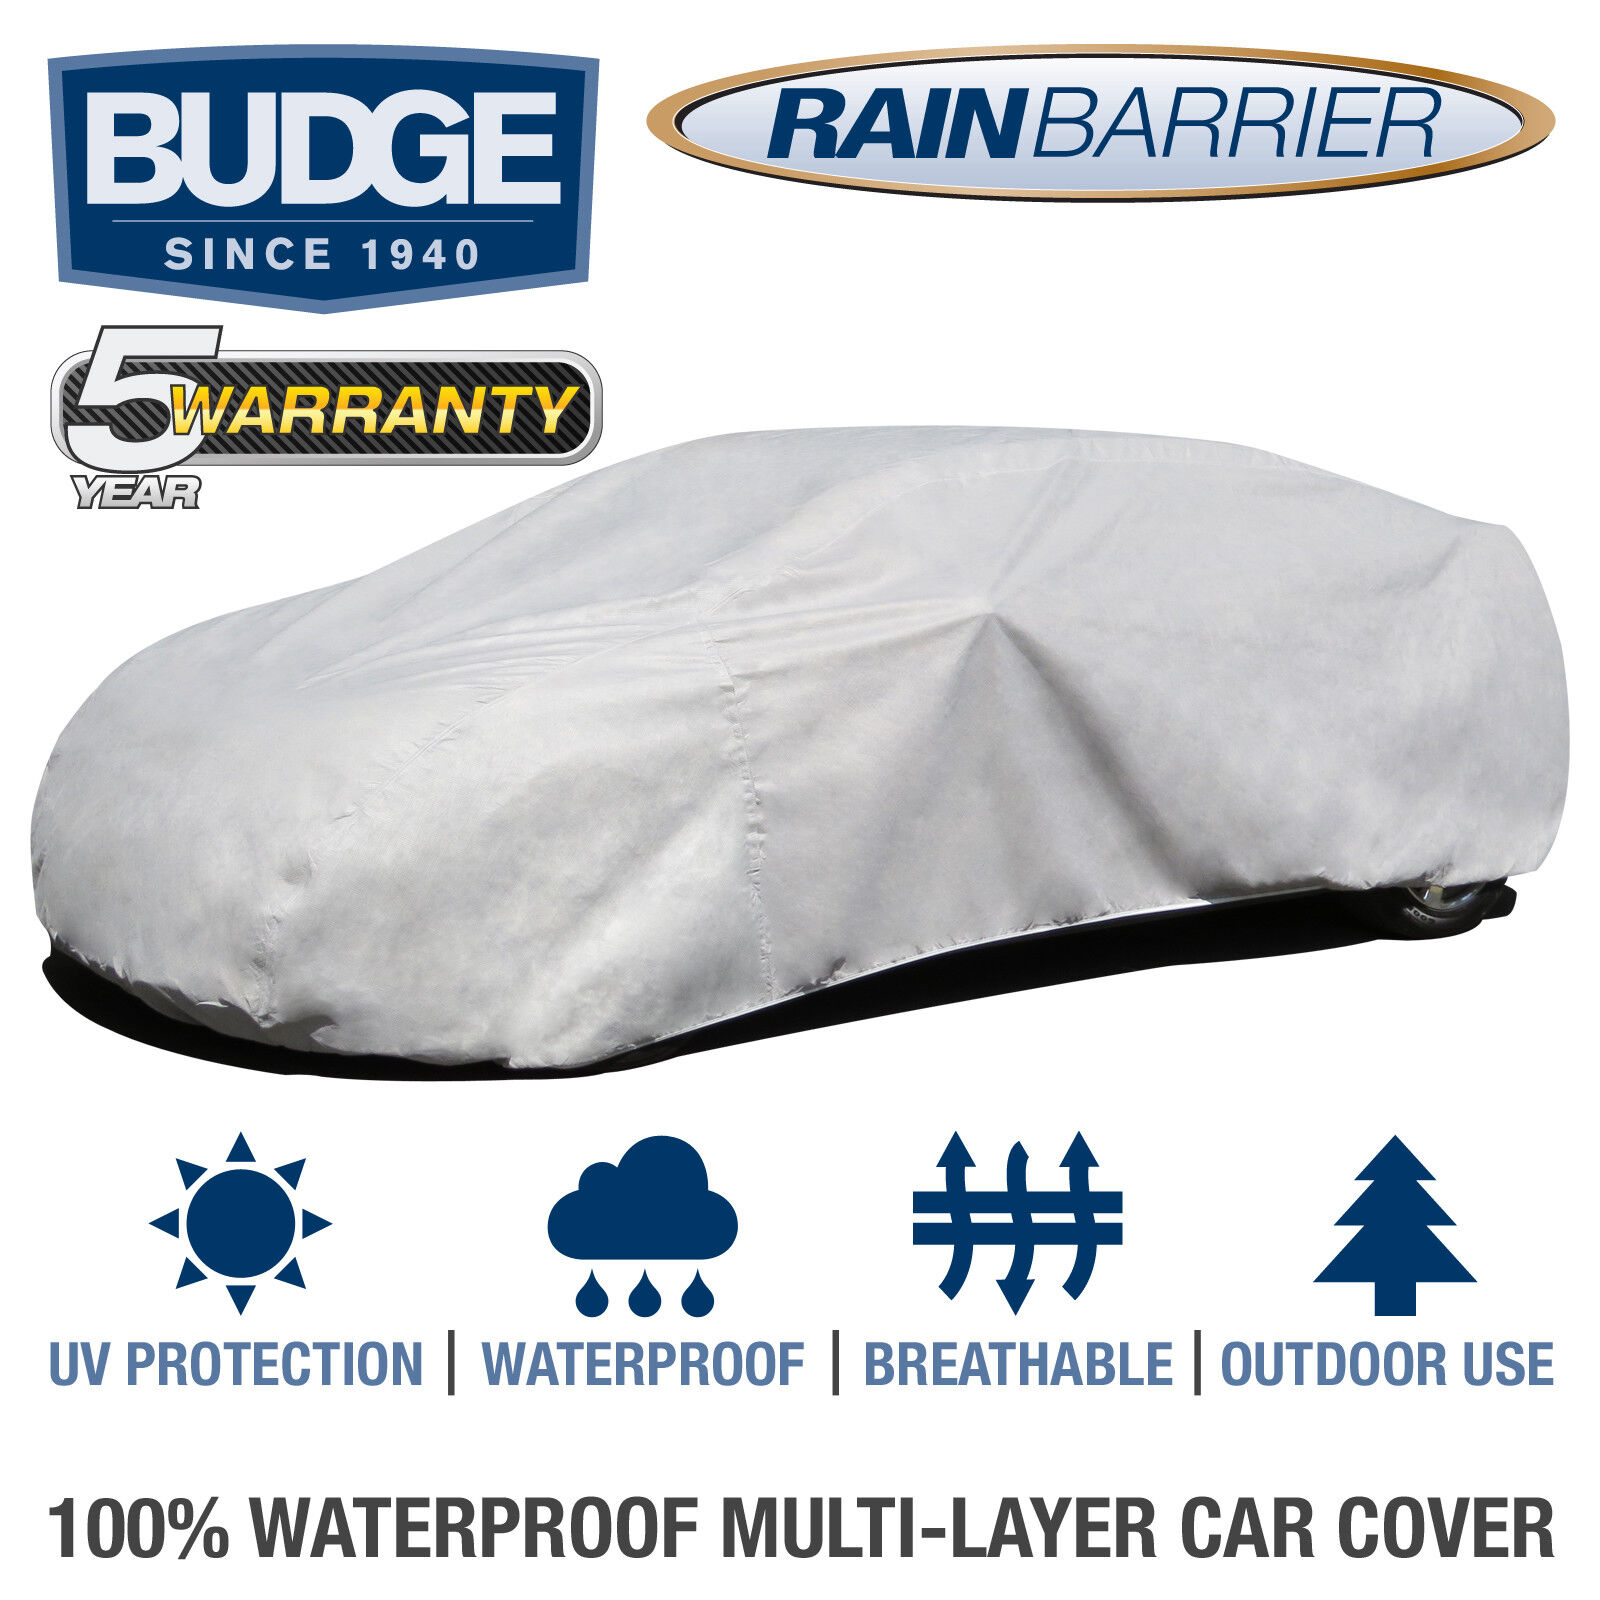 Budge Rain Barrier Car Cover Fits Oldsmobile Toronado 1968|Waterproof|Breathable